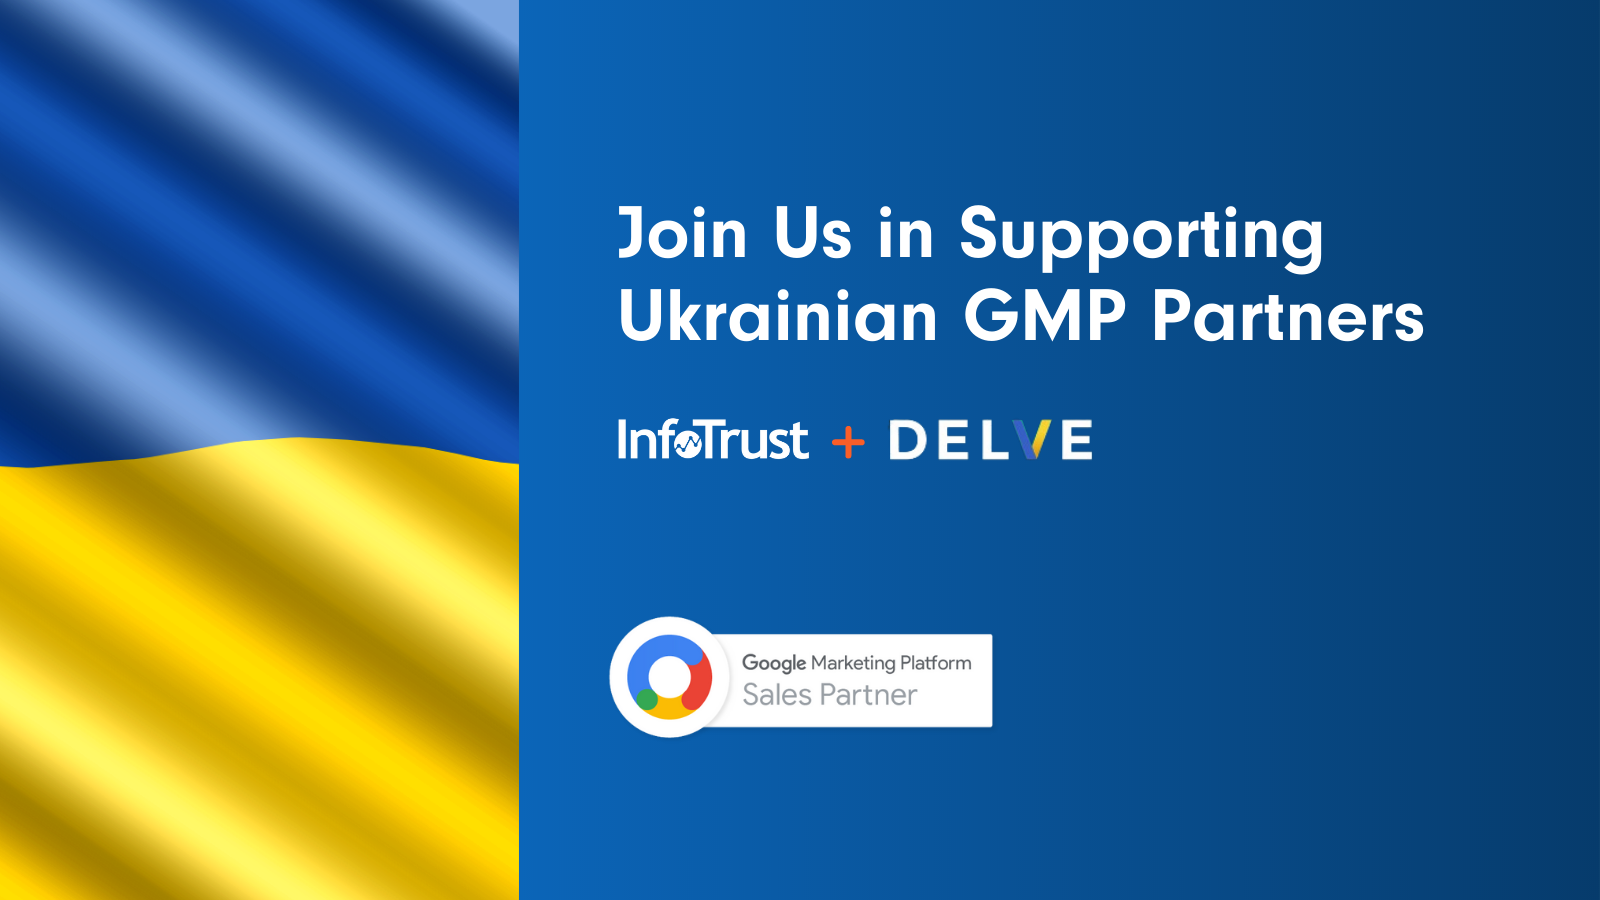 Join InfoTrust and Delve in Supporting Ukrainian Google Marketing Platform Partners